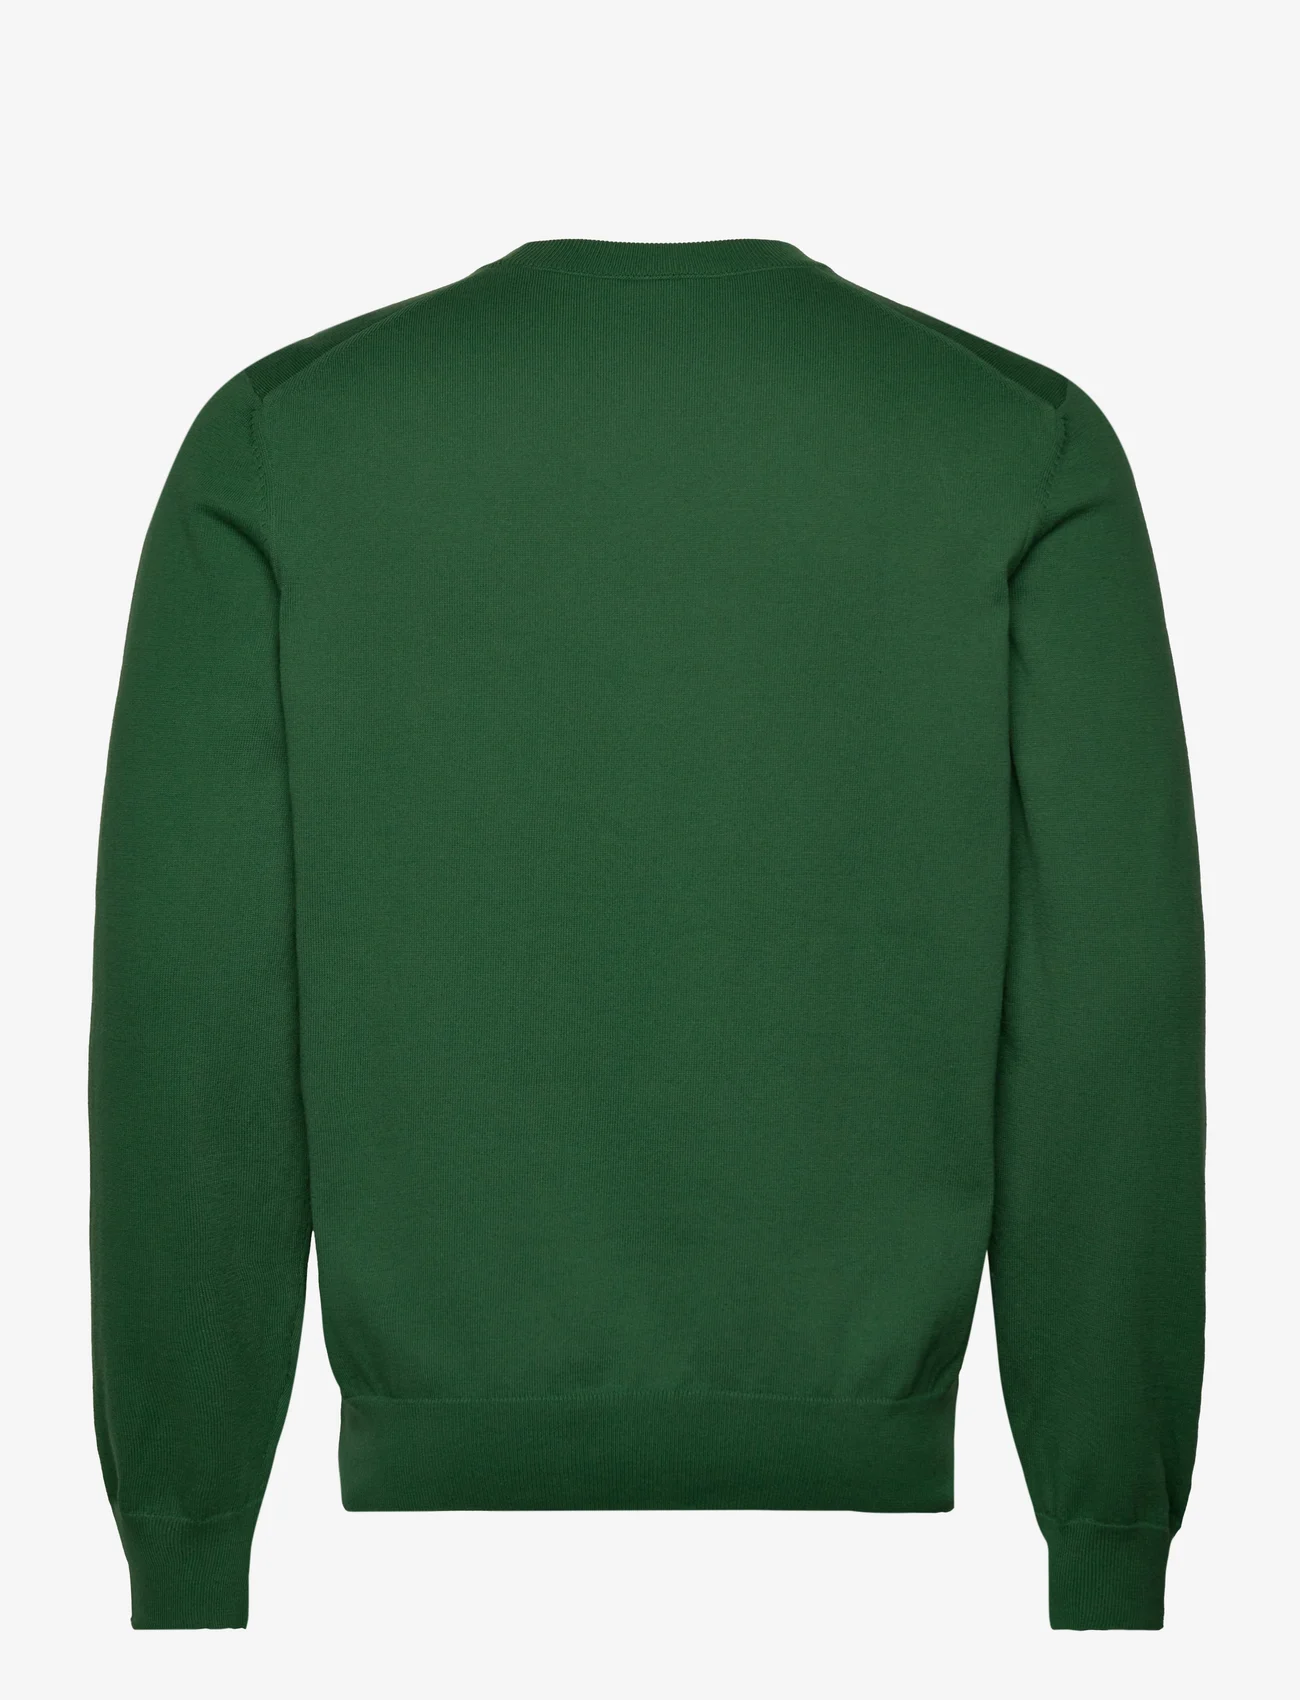 BOSS - Pacello-L - megztinis su v formos apykakle - open green - 1